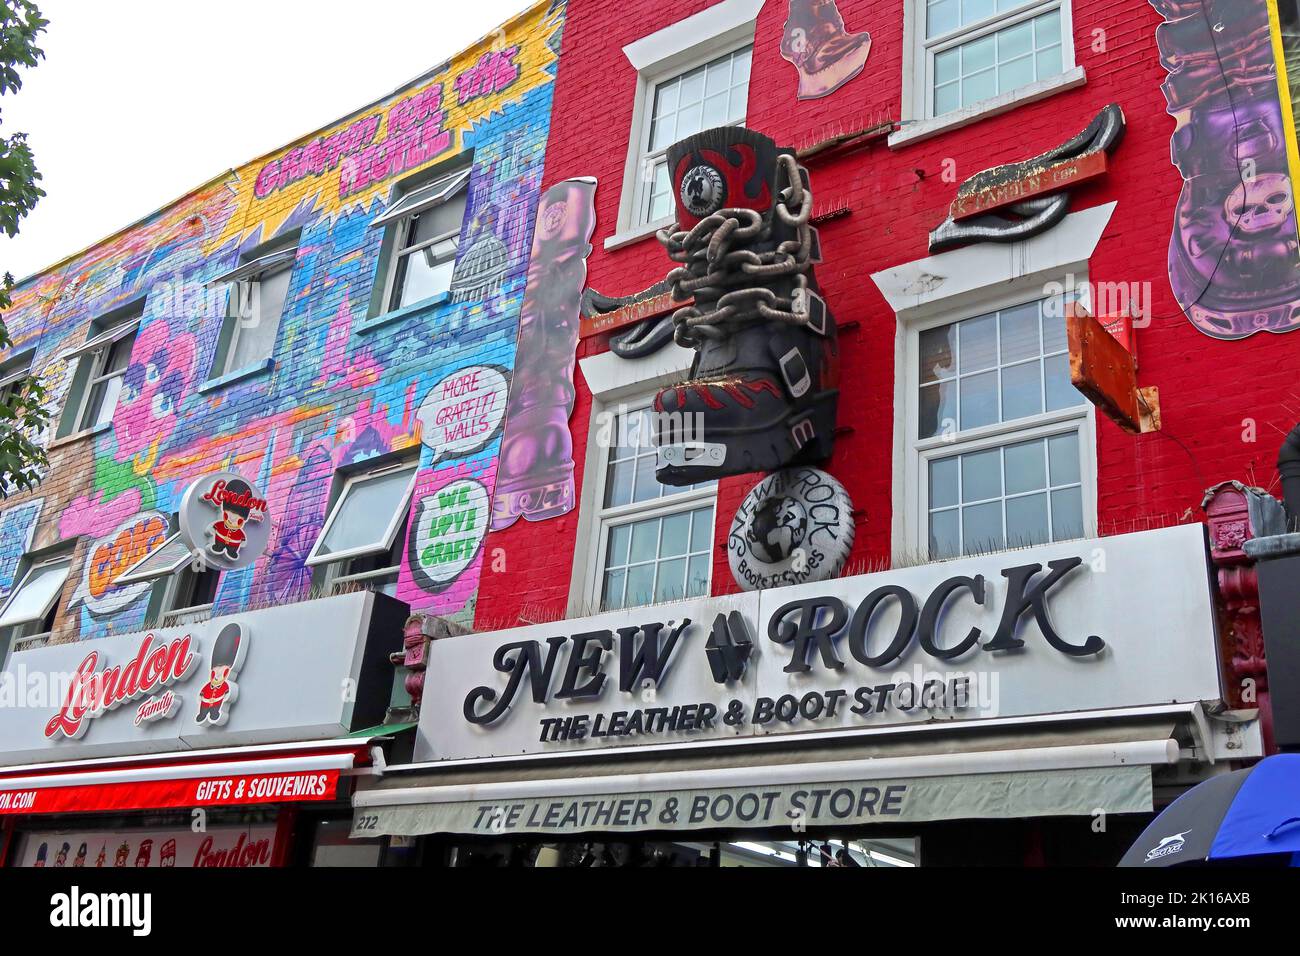 New Rock Boots chic et pré-aimé Fashion 212 Camden High Street, Camden Town, Londres, Angleterre, Royaume-Uni, NW1 8QR Banque D'Images